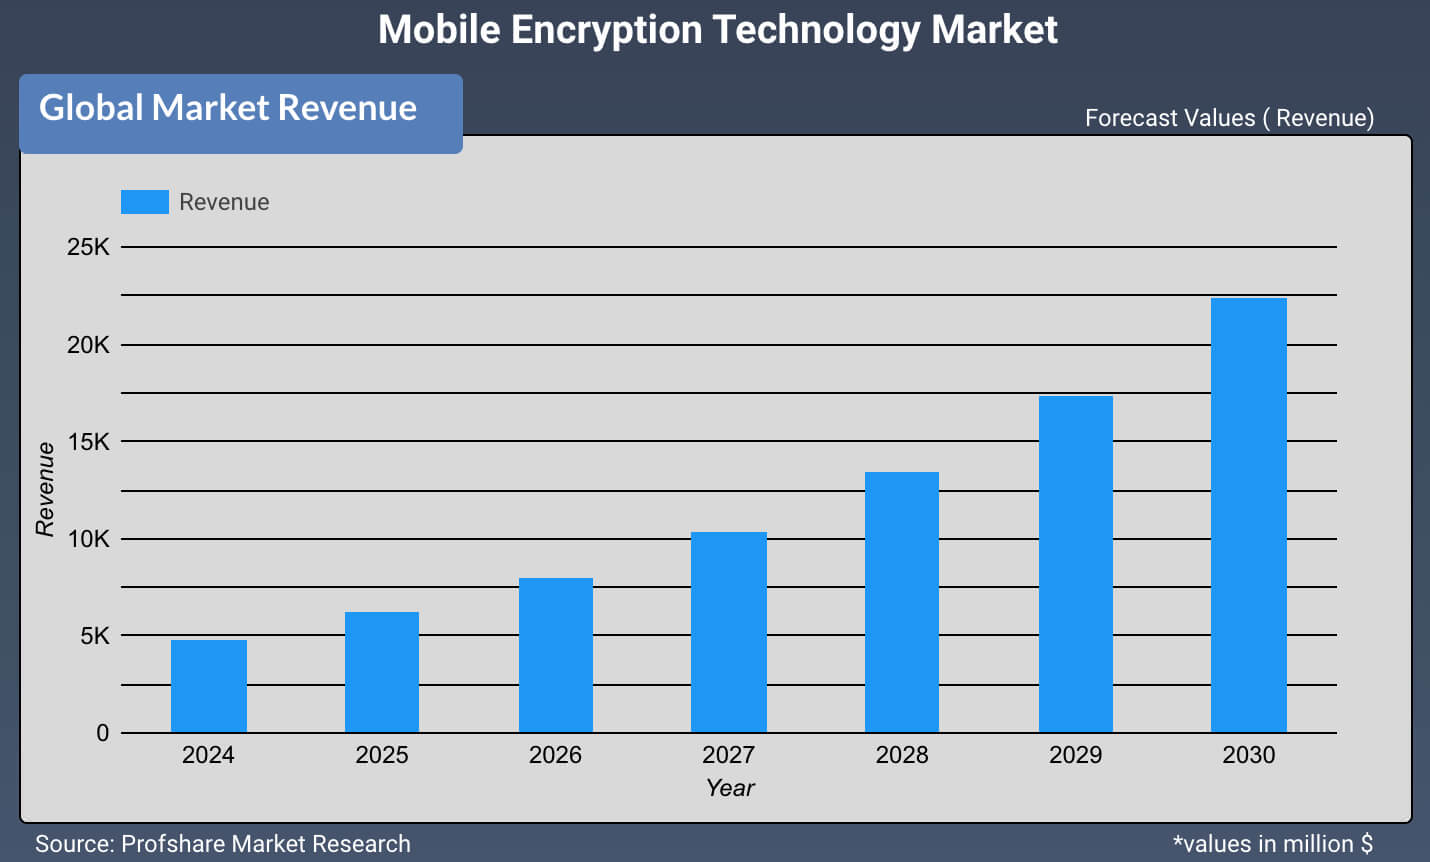 Mobile Encryption Technology Market